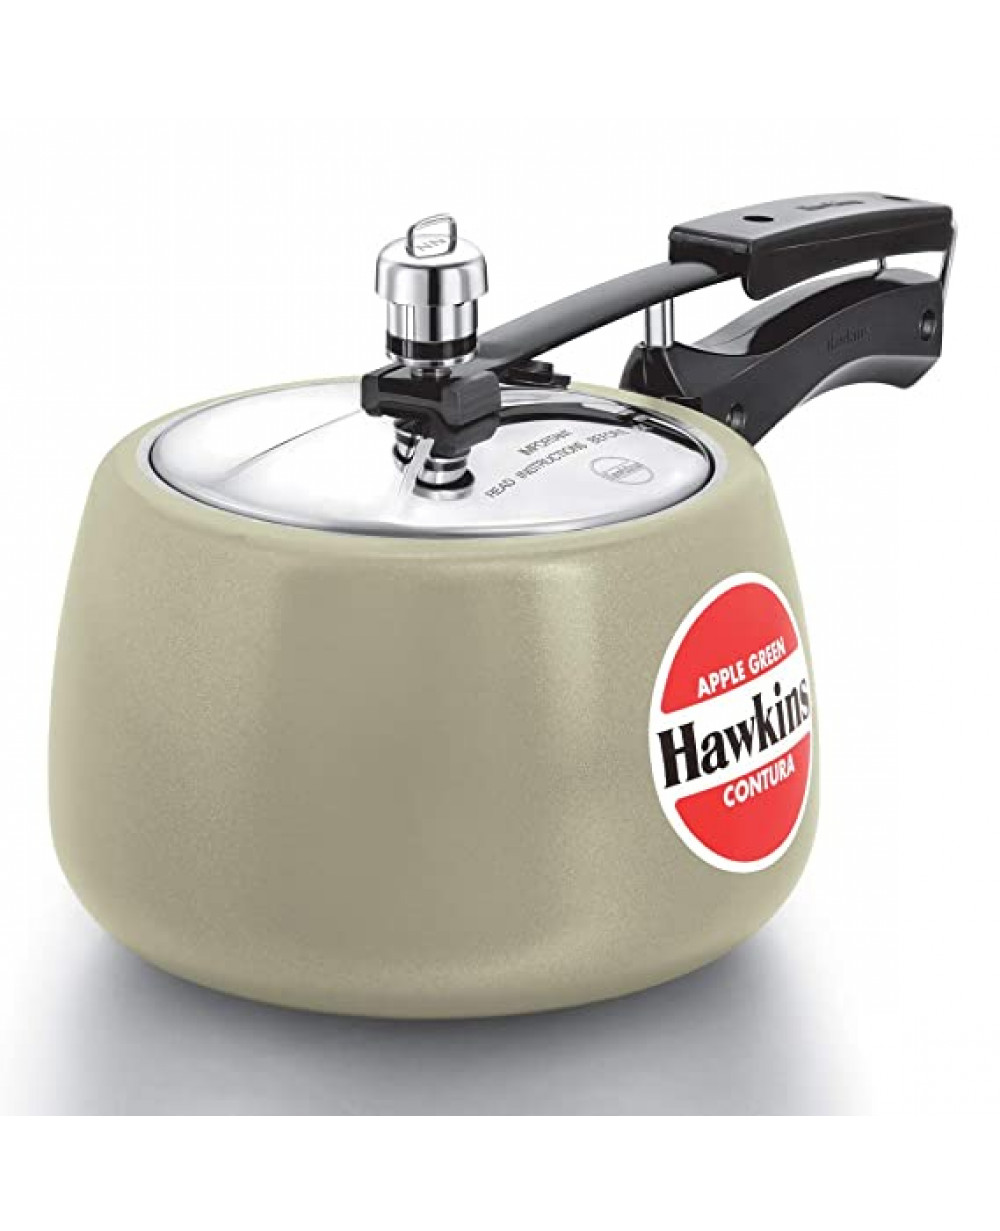 Hawkins Contura Ceramic-Coated 5 Ltr Pressure Cooker Apple Green CAG50 